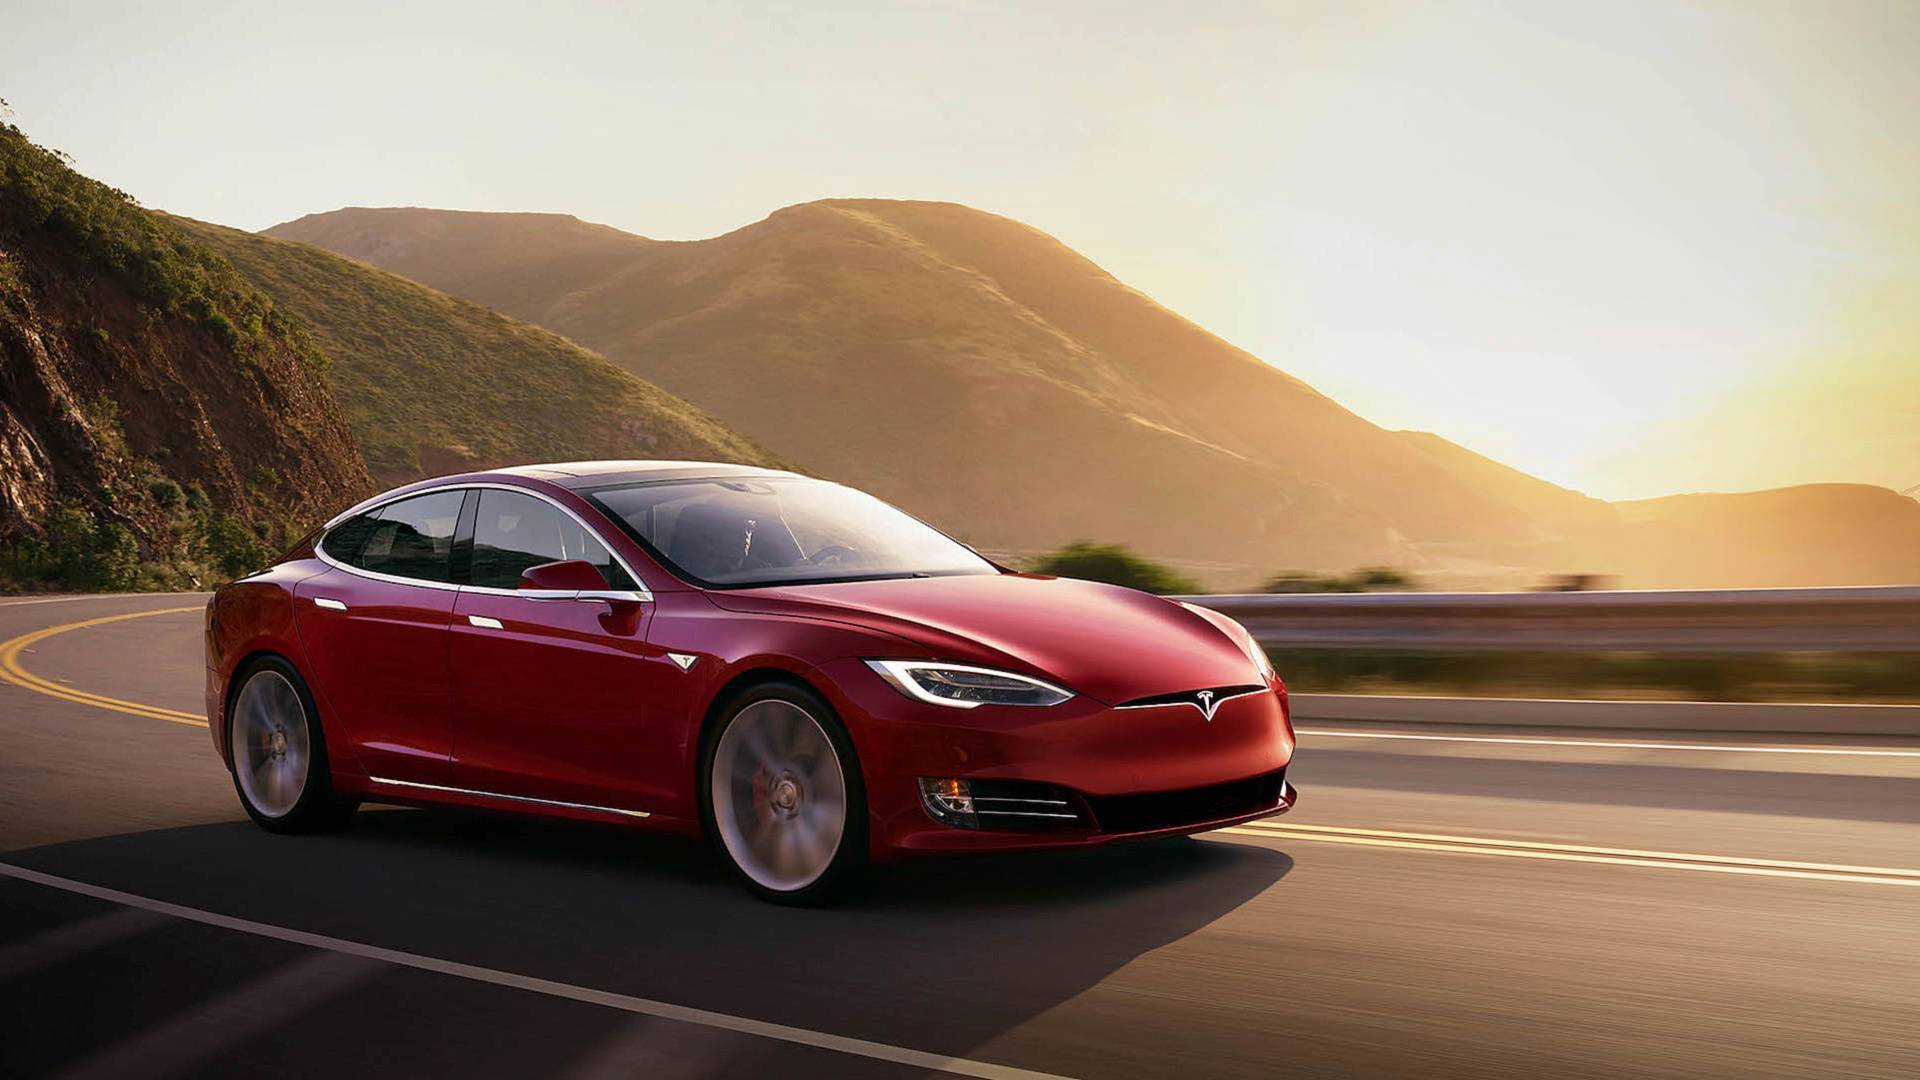 2. Tesla Model S: 32.4 days